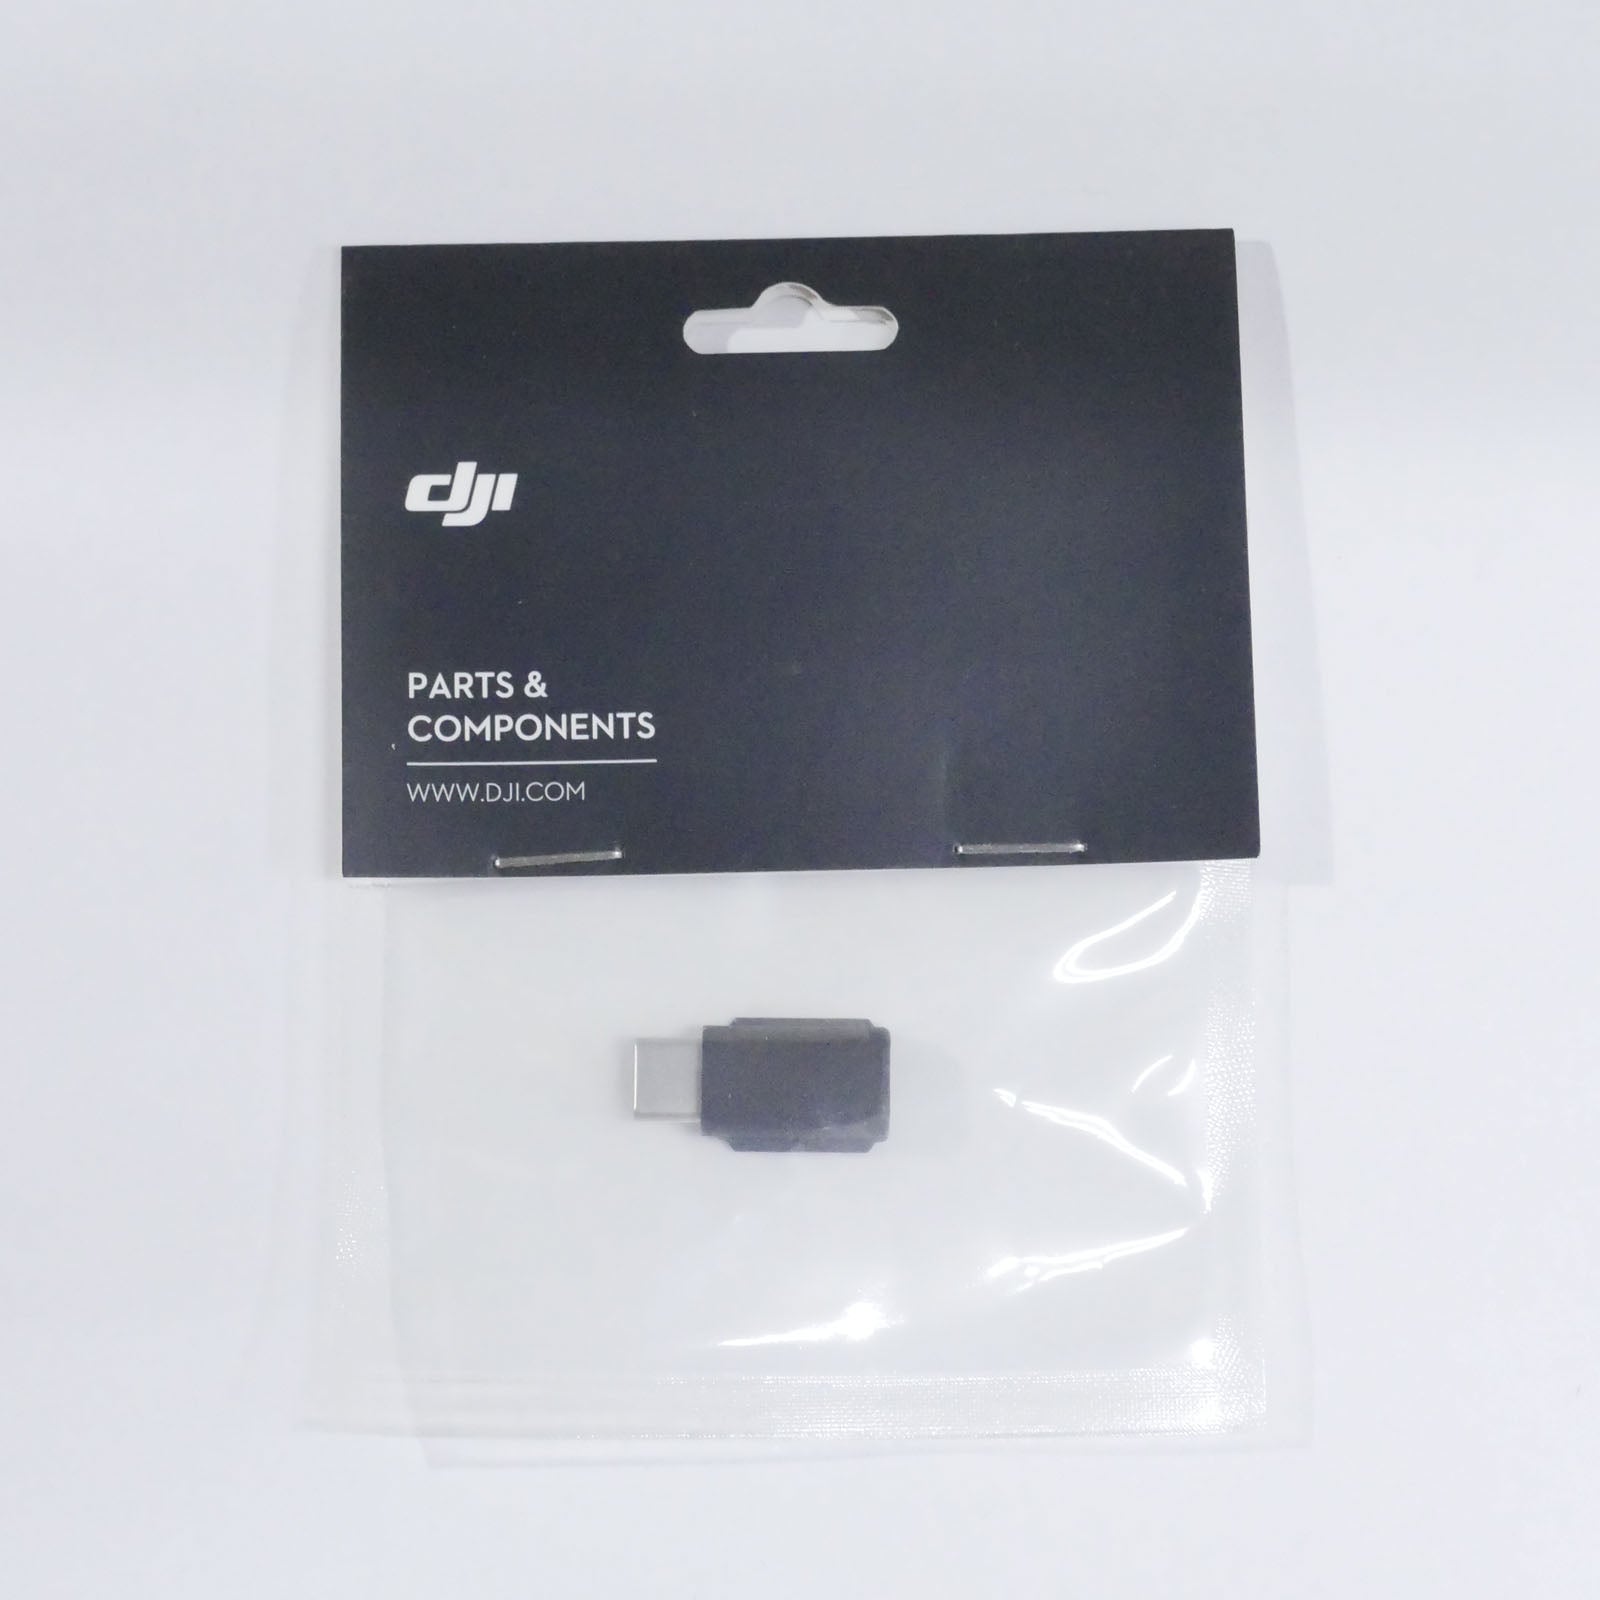 DJI(ディージェイアイ) OSMO POCKET パーツNo.12 スマートフォンアダプター(USB-C) OMPP12 未開封品